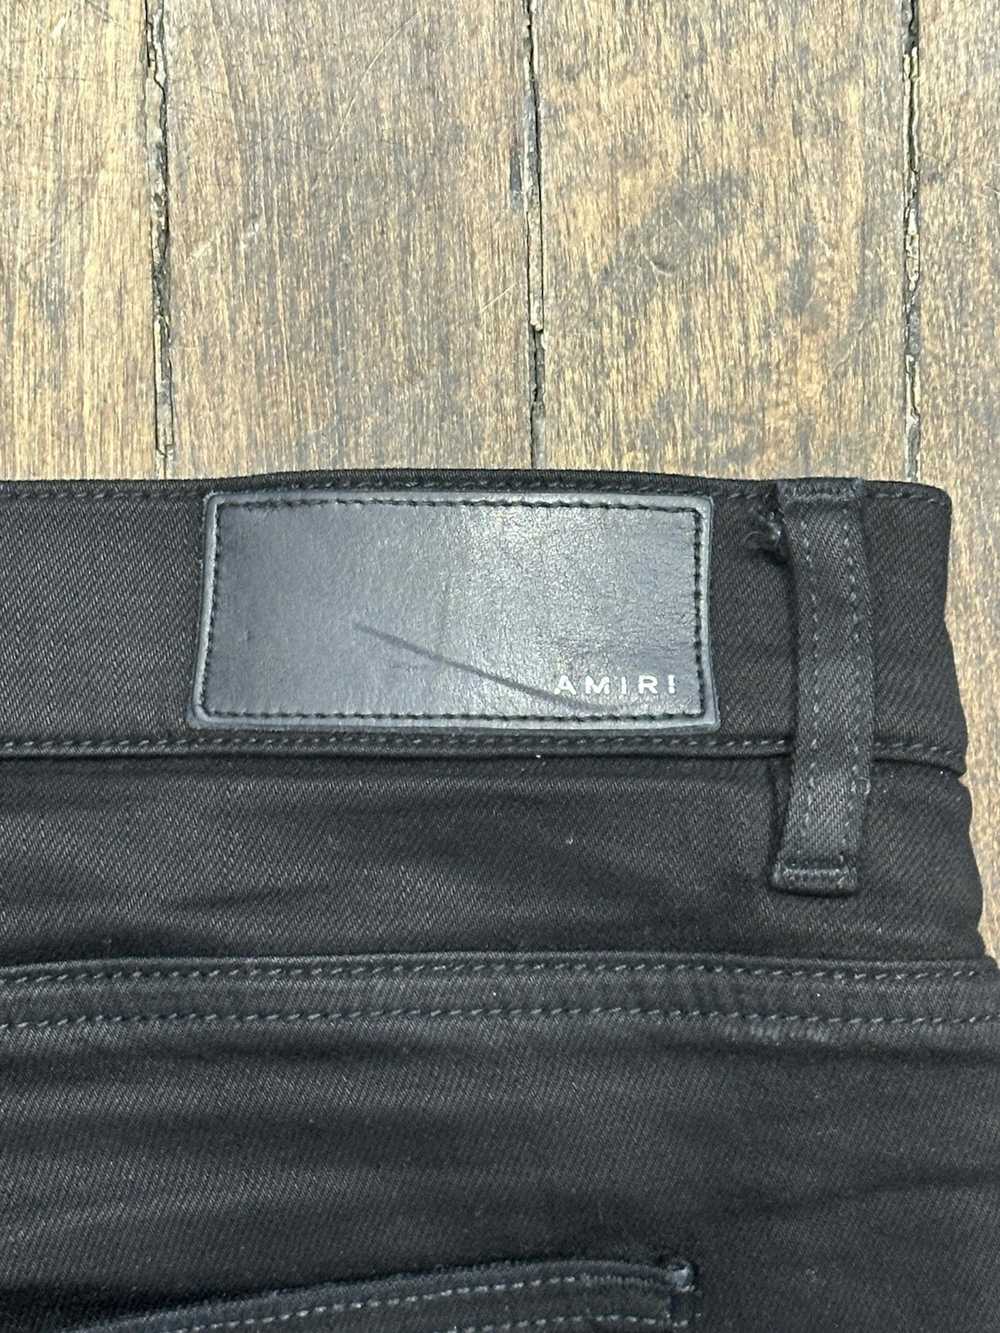 Amiri Amiri MX1 Black Patch Jeans Size 36 Pre-own… - image 7